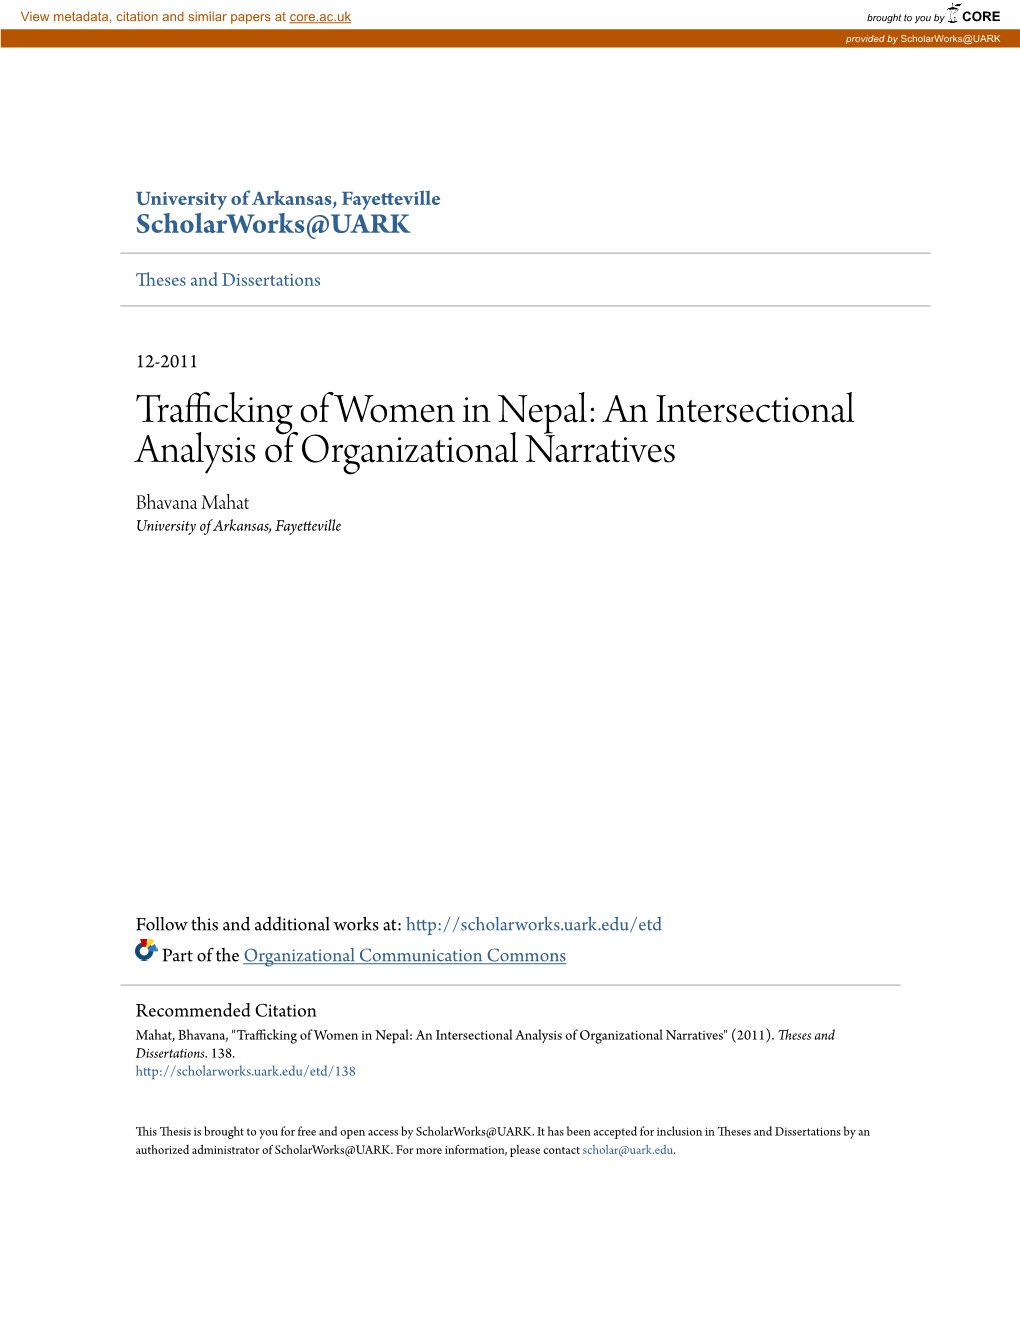 Trafficking of Women in Nepal: an Intersectional Analysis of Organizational Narratives Bhavana Mahat University of Arkansas, Fayetteville